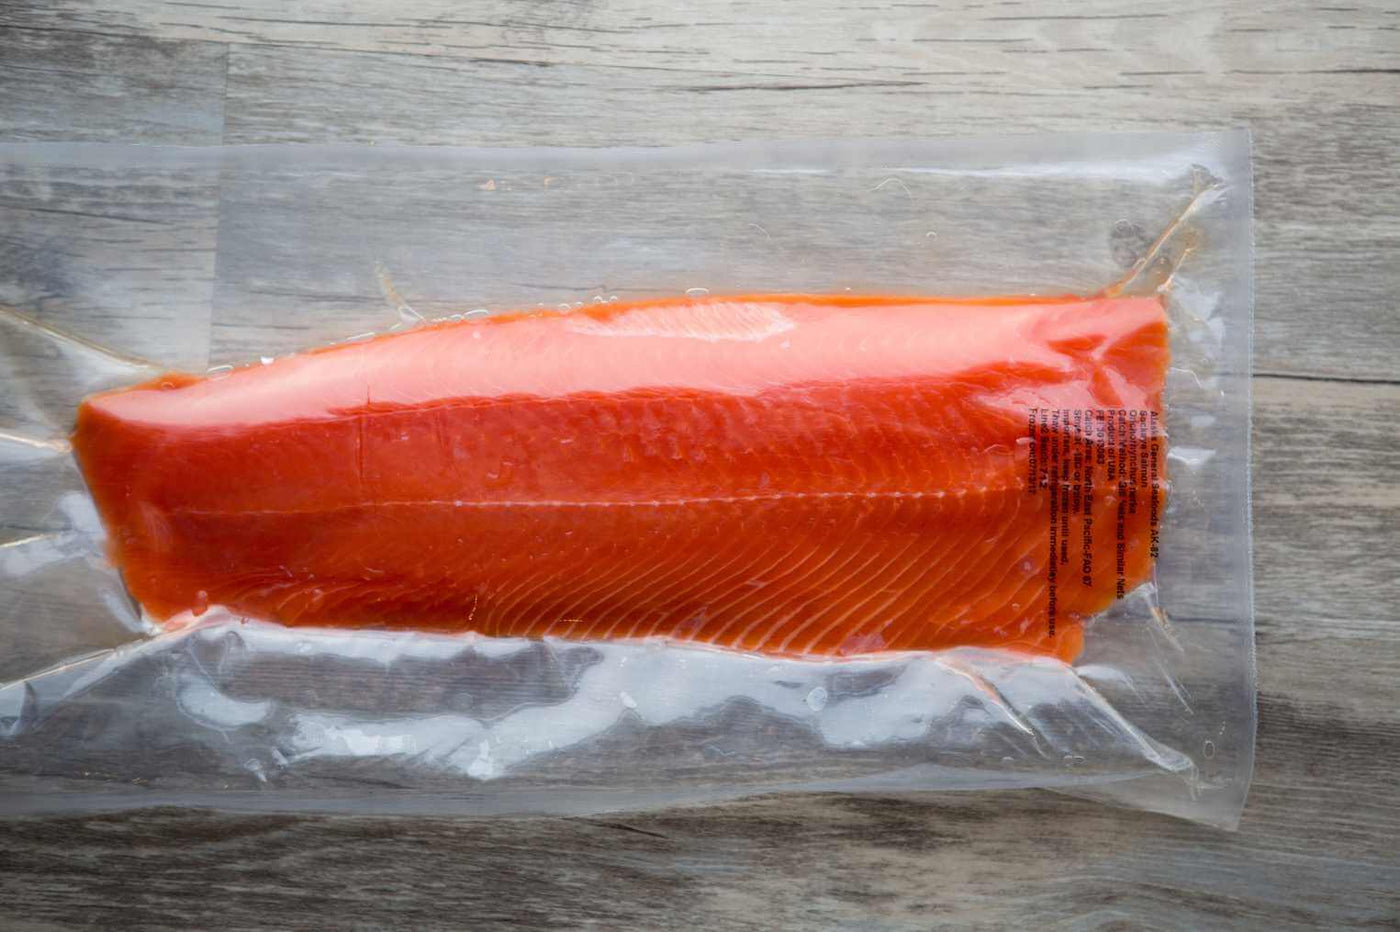 Wild Caught Alaskan Sockeye Salmon Fillets - Buy Wild Salmon Online